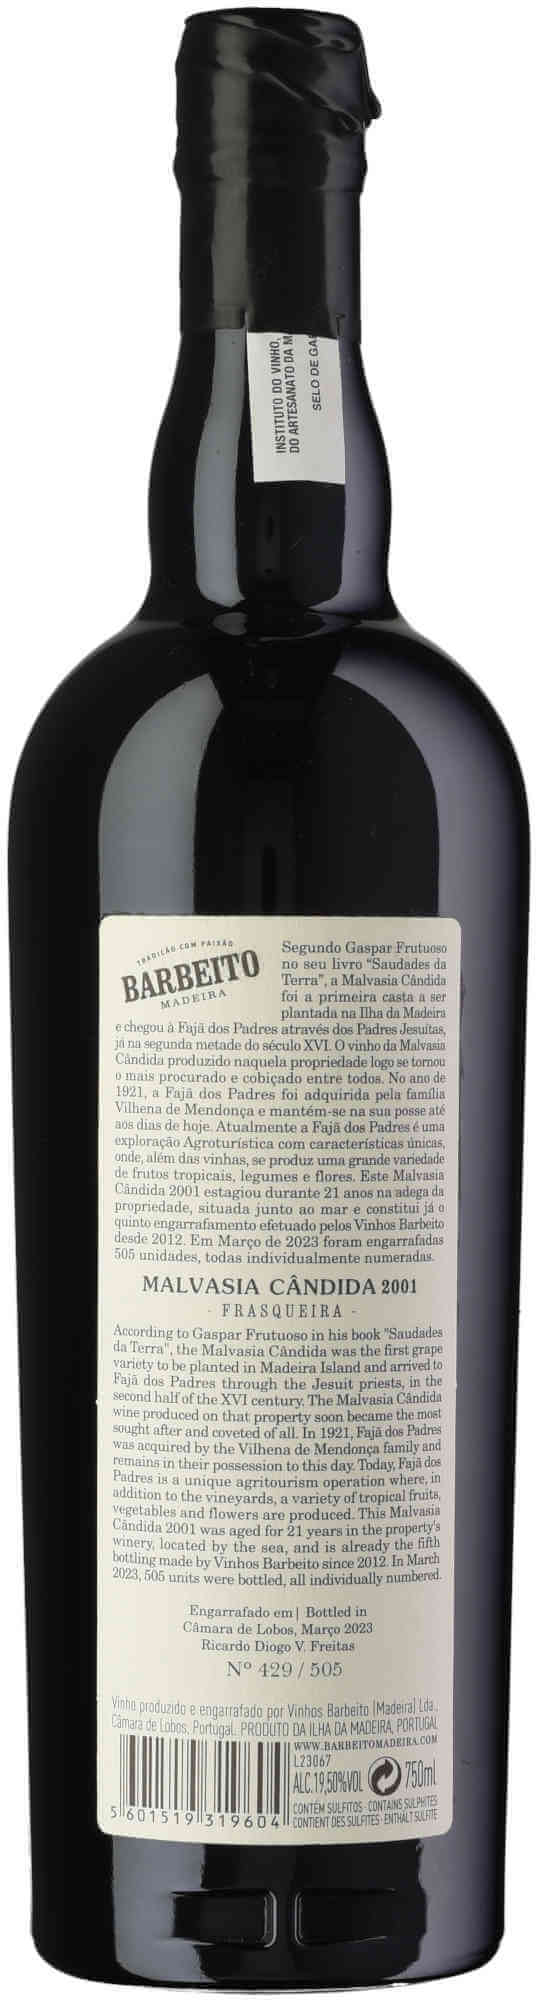 Barbeito-Malvasia-Candida-2001-back